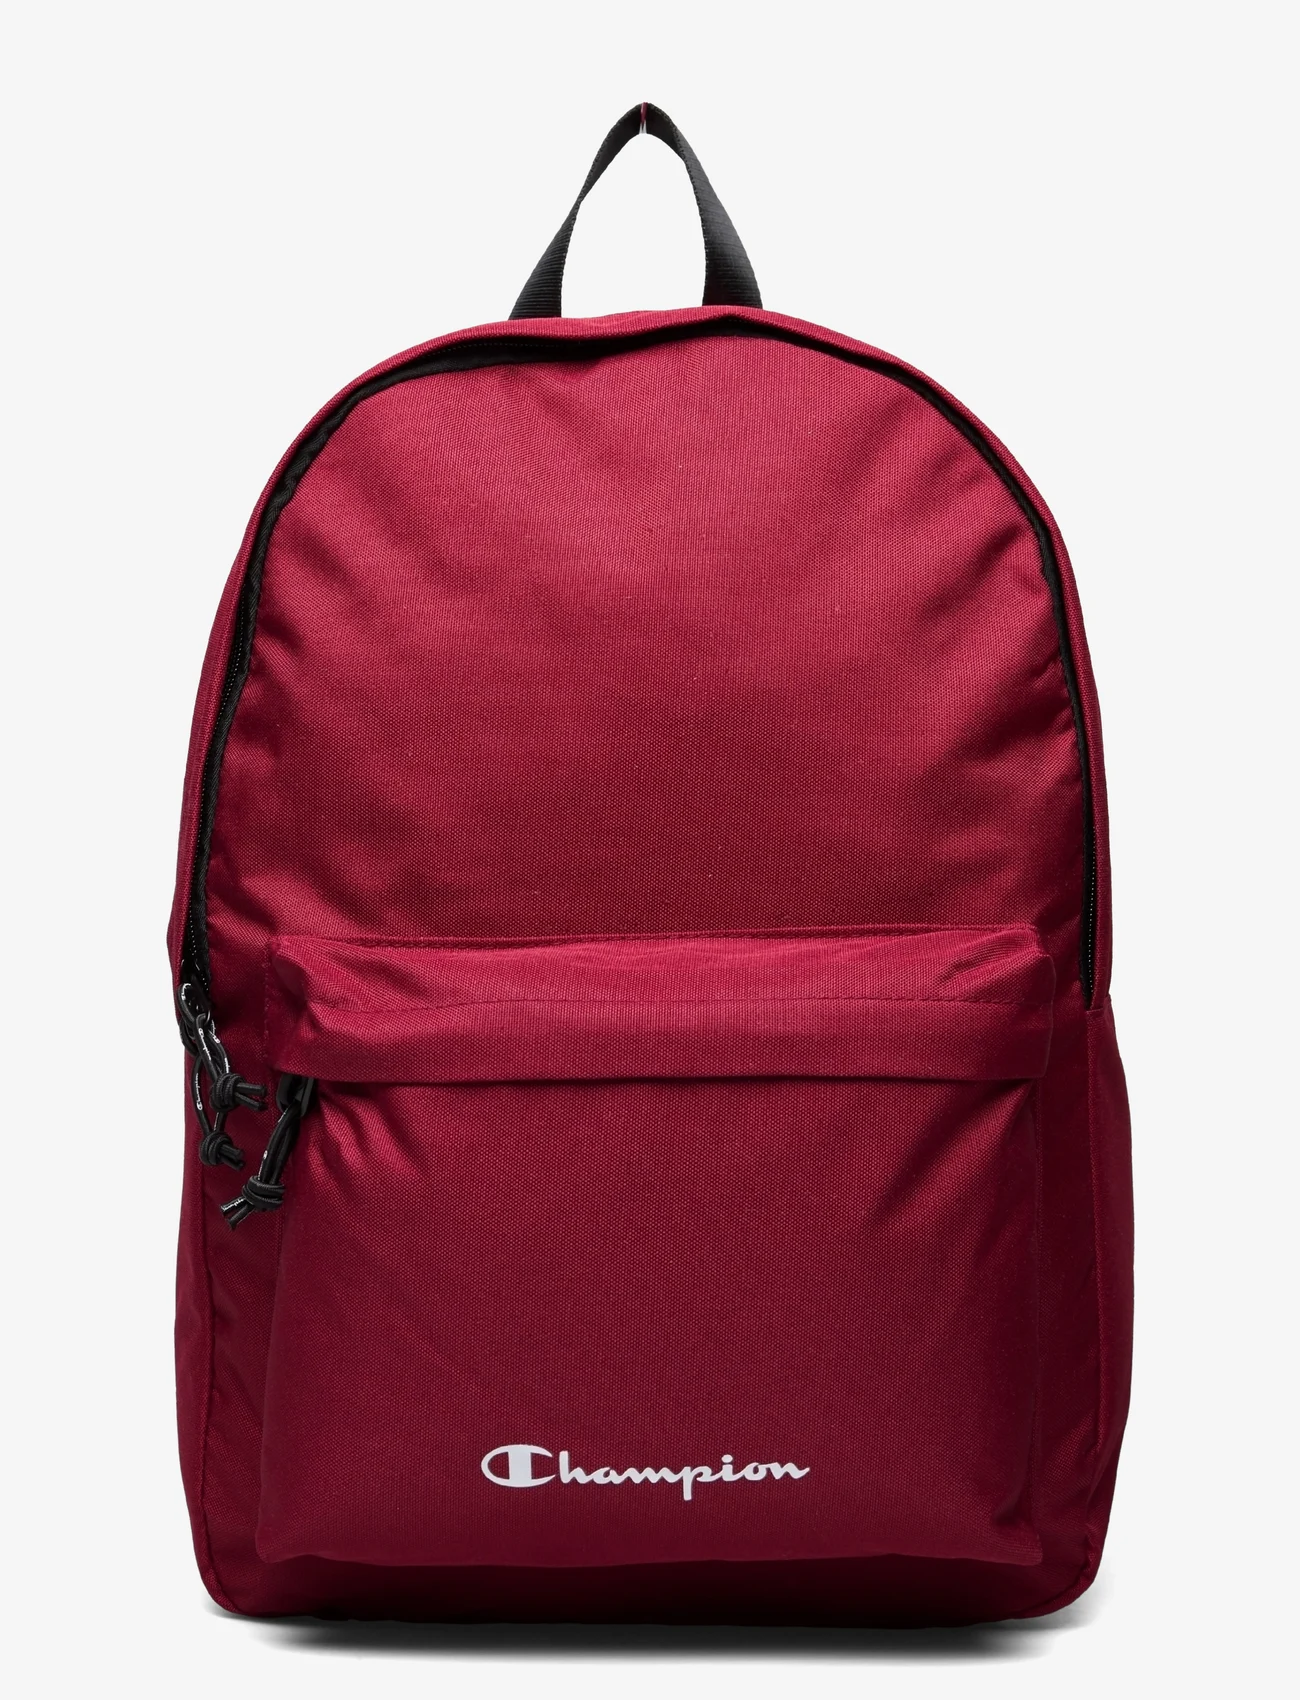 Champion - Backpack - sporttaschen - rhubarb - 0